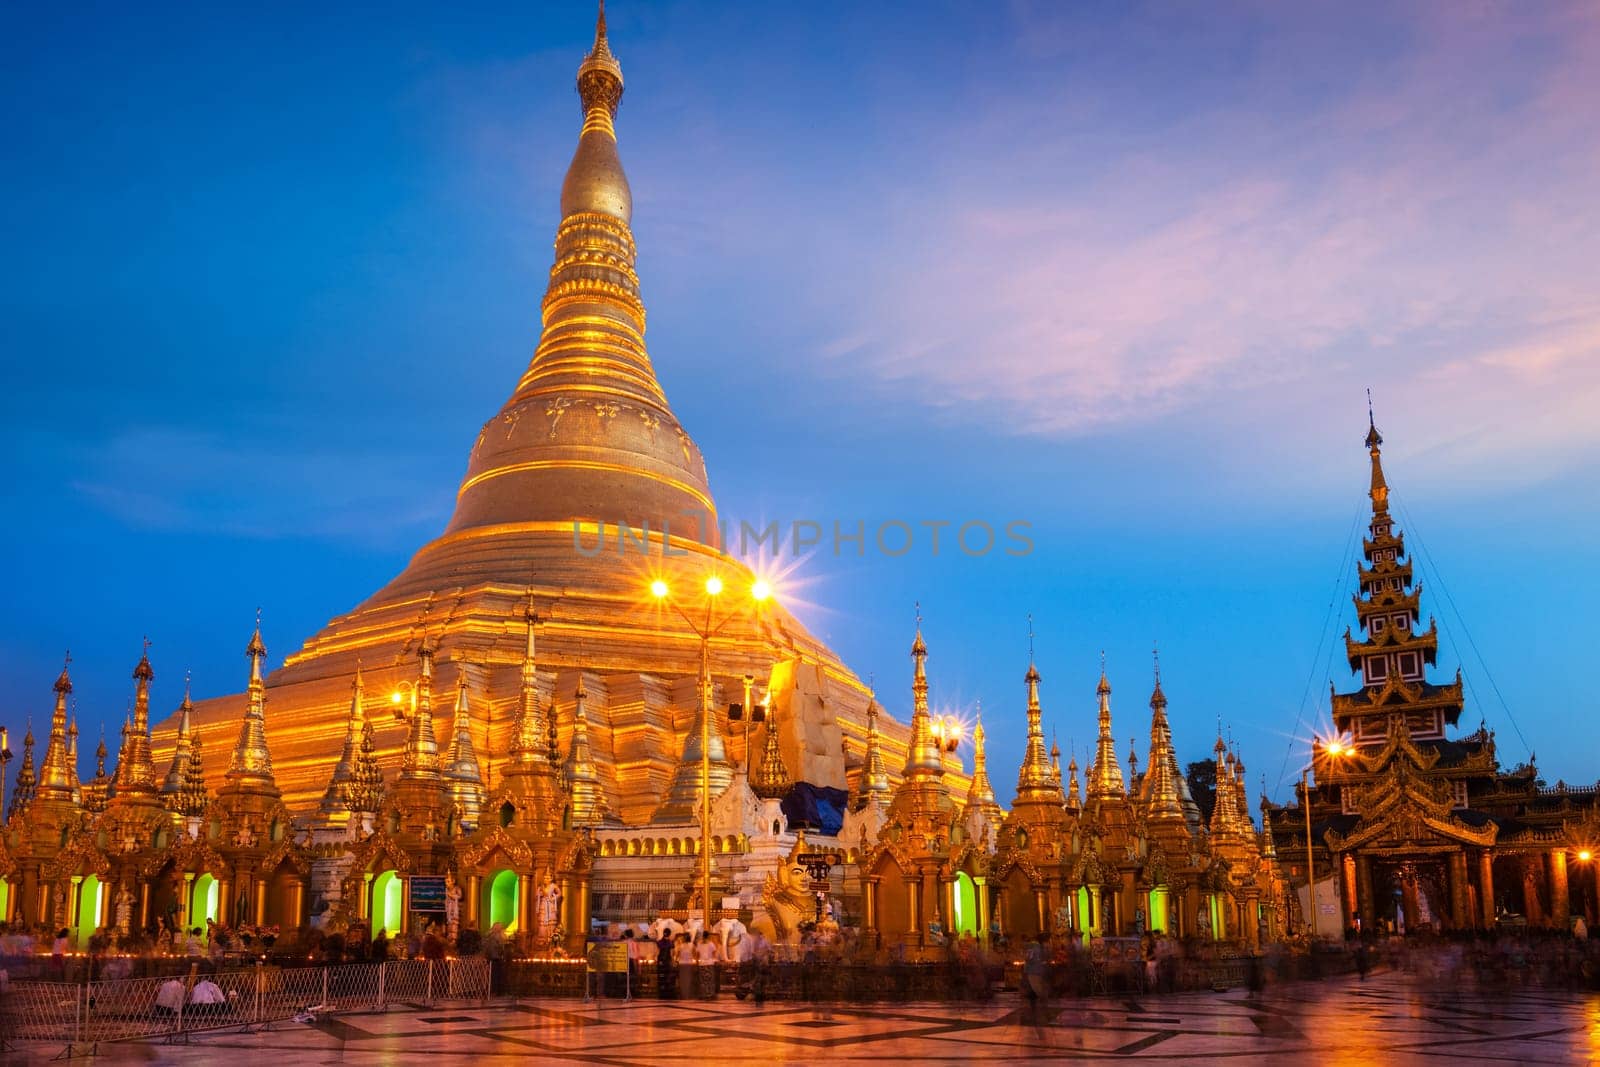 Myanmar famous sacred place and tourist attraction landmark - Shwedagon Paya pagoda illuminated in the evening. Yangon, Myanmar Burma